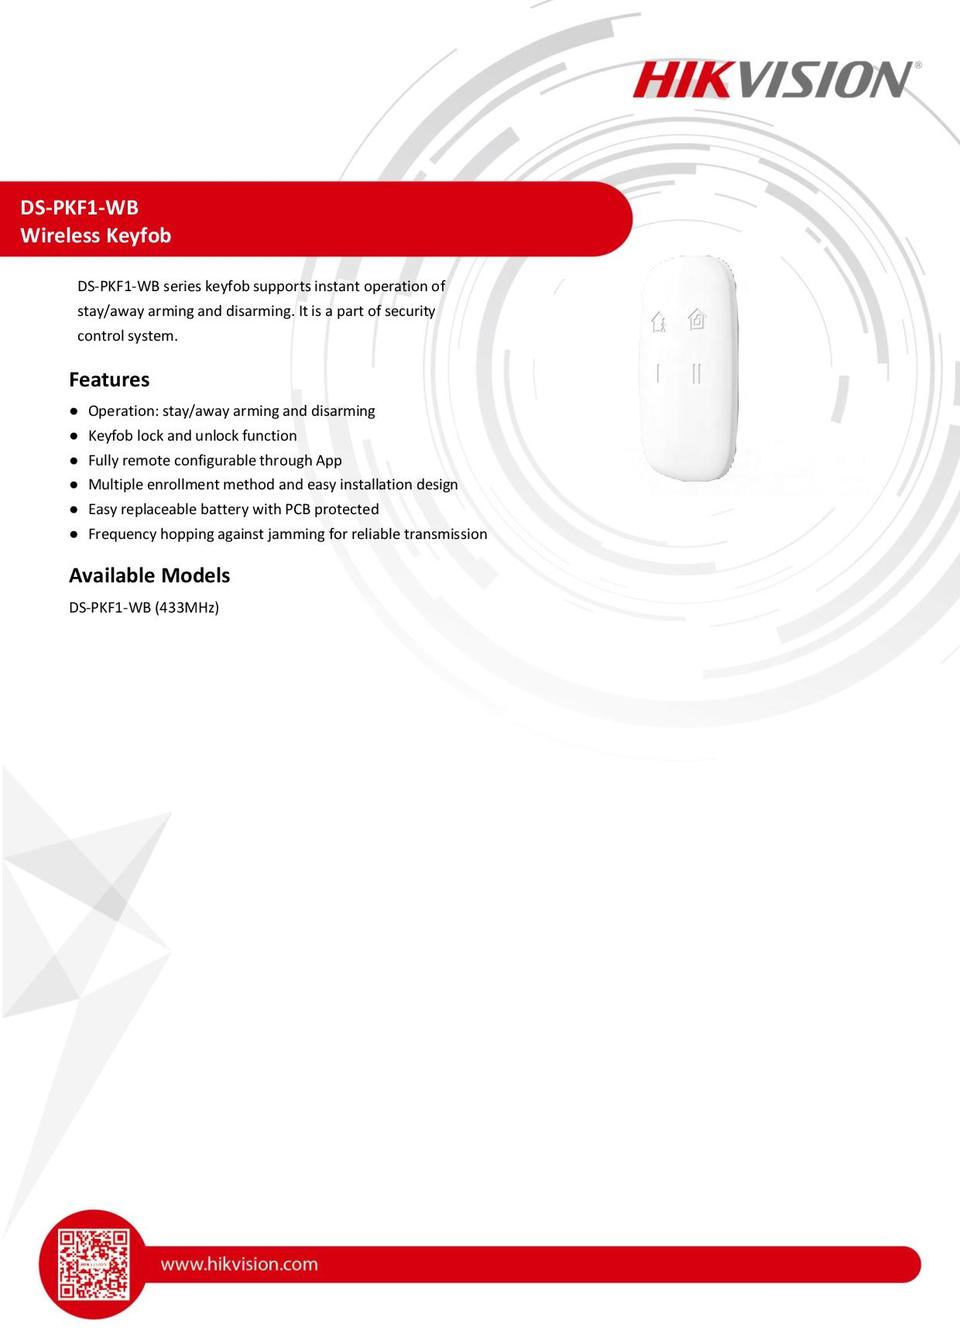 Hikvision DS-PKF1-WB AX Pro Wireless Keyfob Remote 0